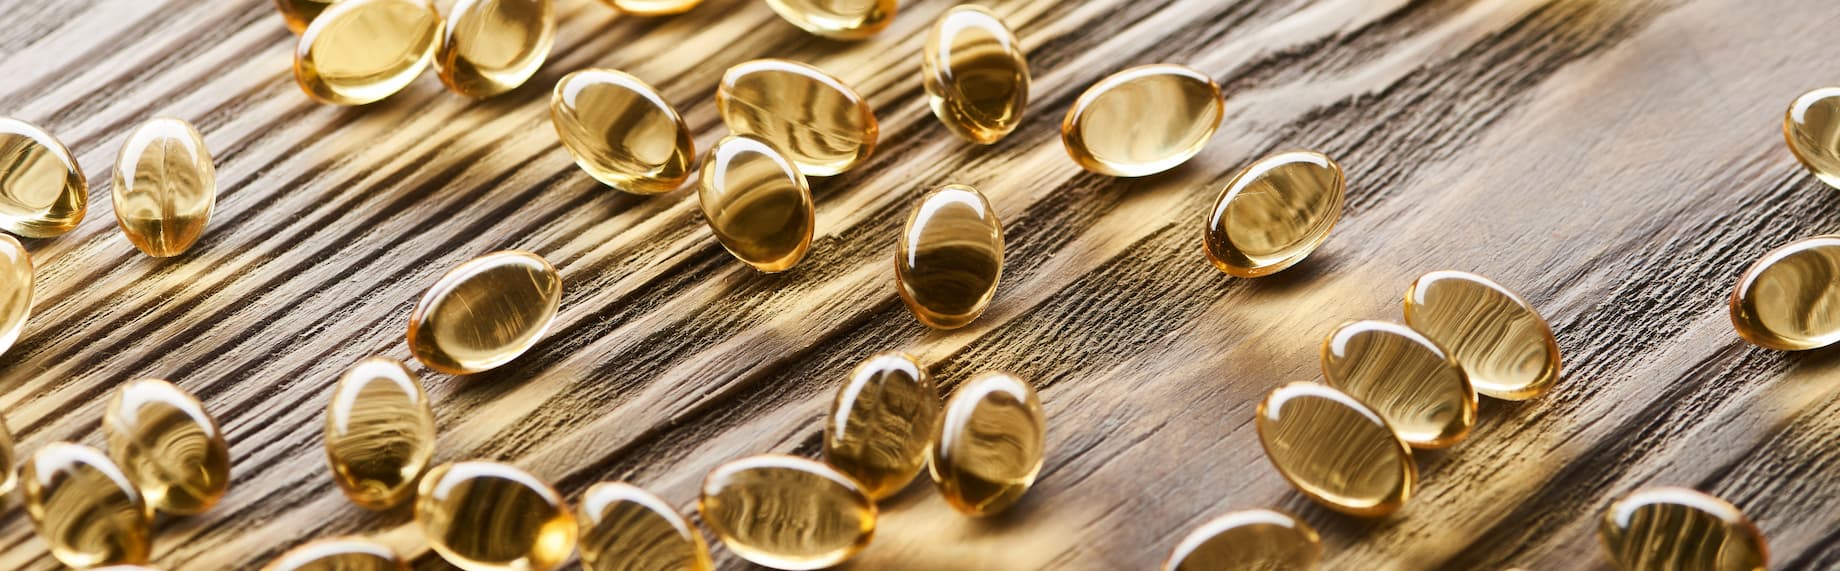 Omega 3-6-9 vs Omega-3: Why You Should Stop Taking Omega 3-6-9 Supplements